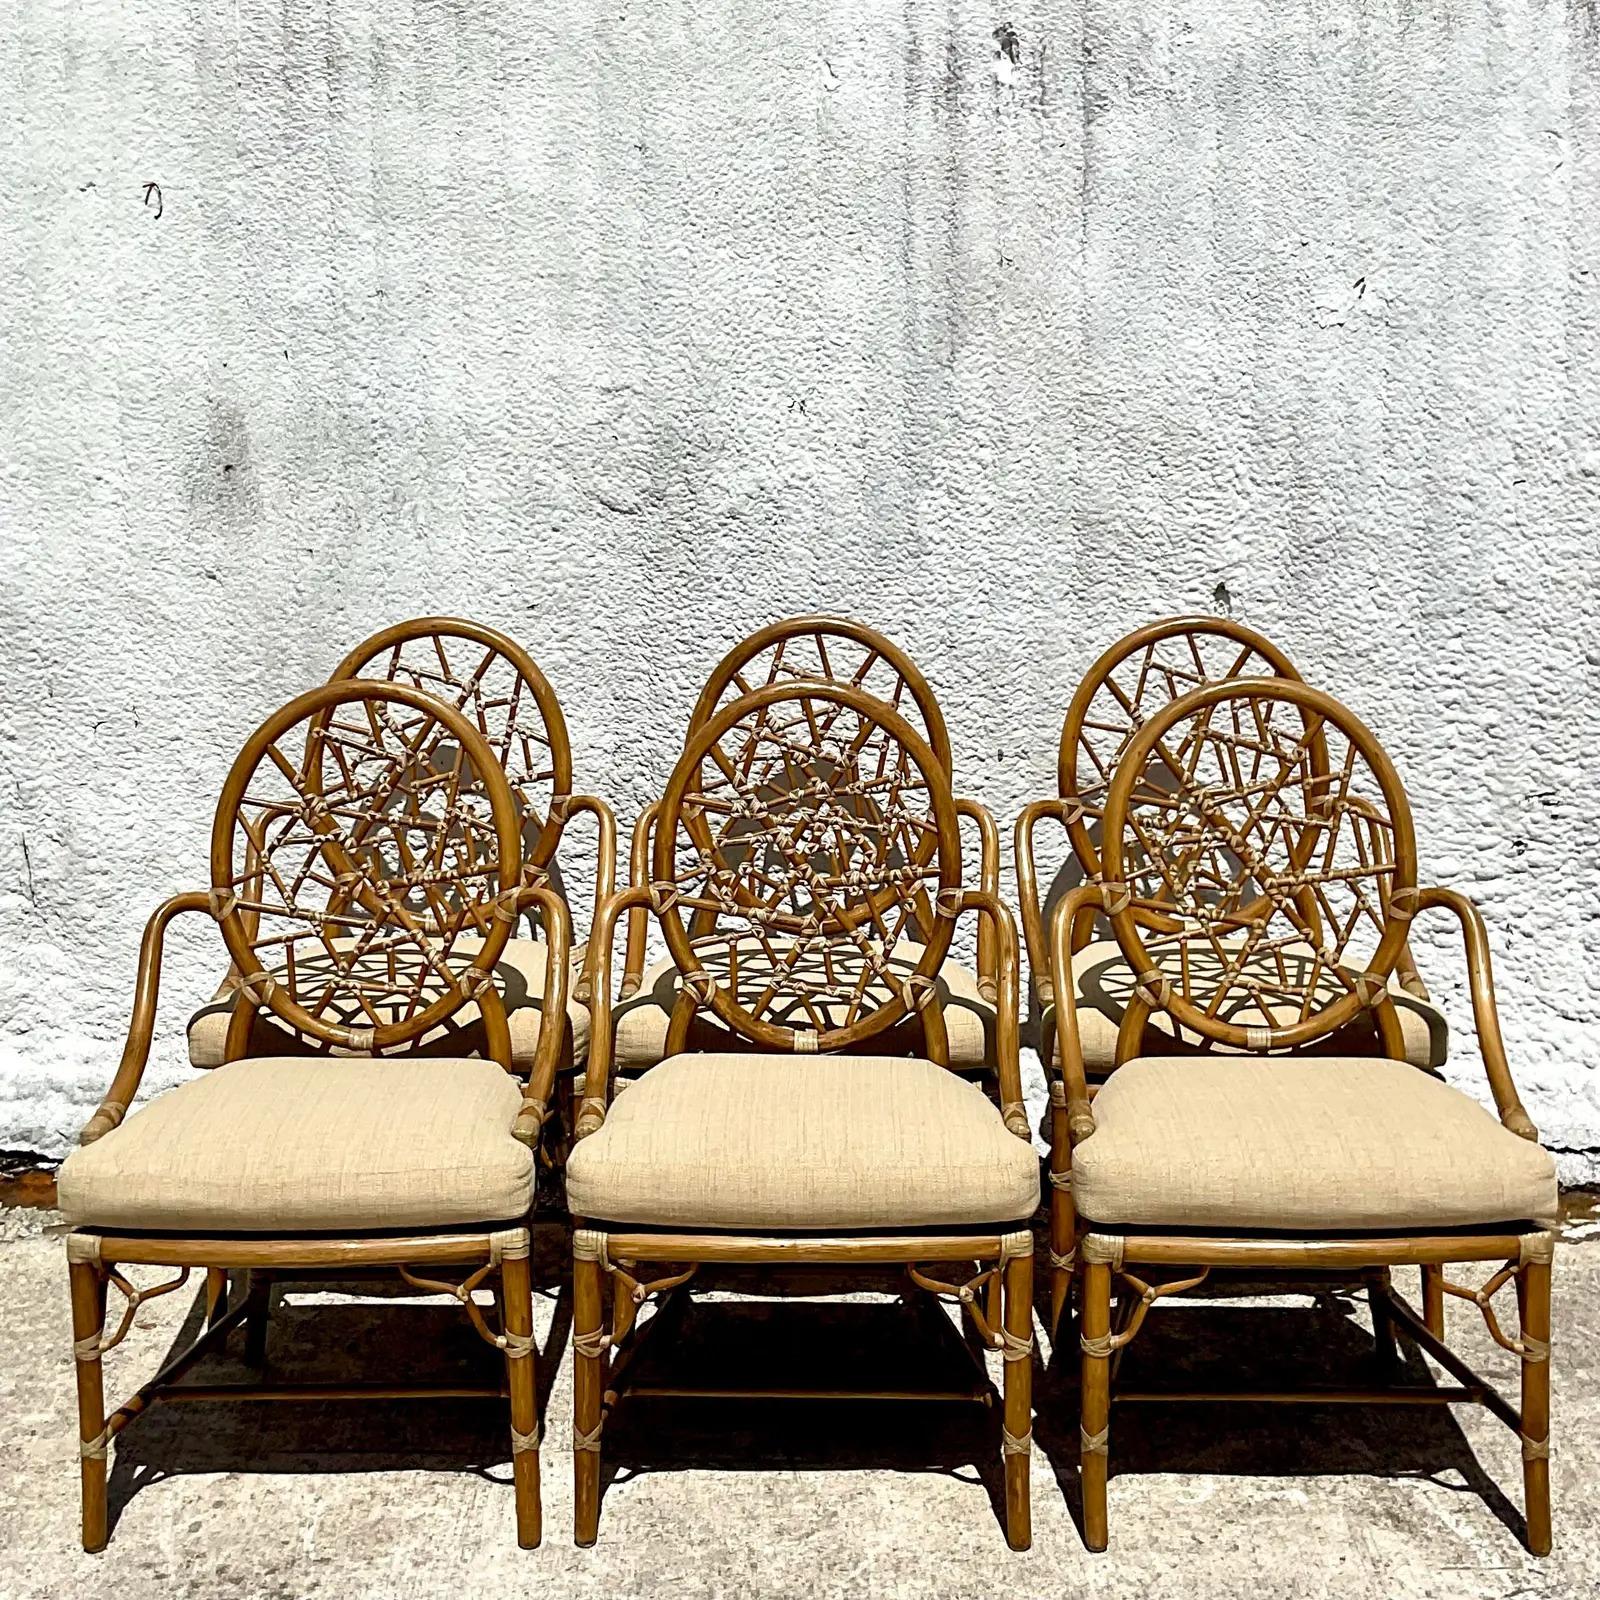 Vintage Coastal McGuire “Cracked Ice” Rattan Dining Chairs - Set of 6 3